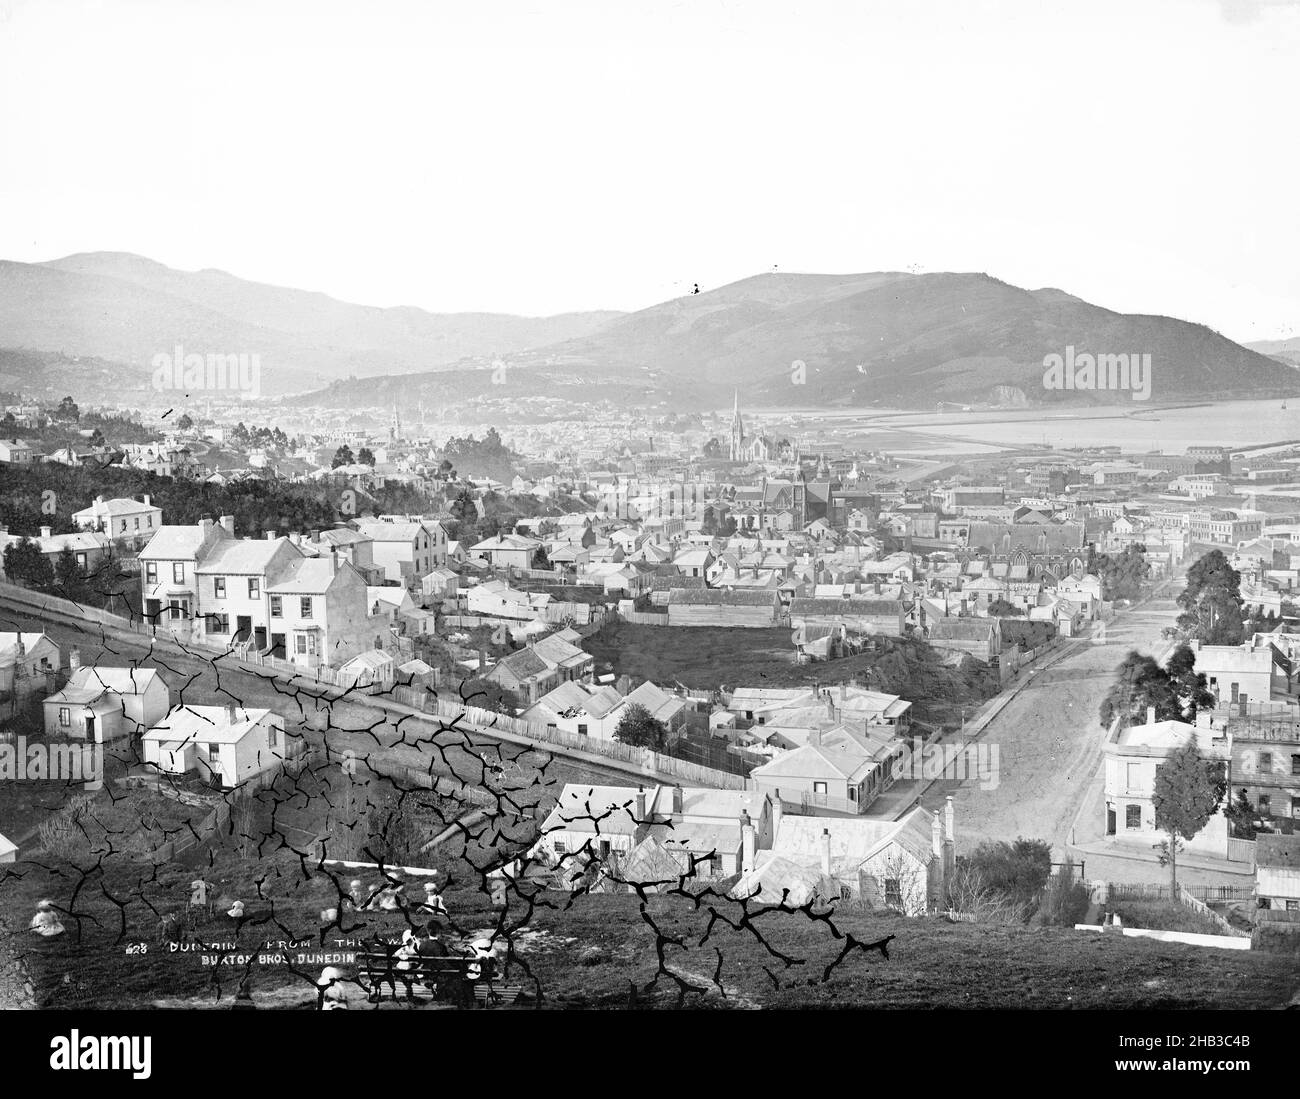 Dunedin from the south west, Burton Brothers studio, photography studio, 1870s, Dunedin, black-and-white photography Stock Photo